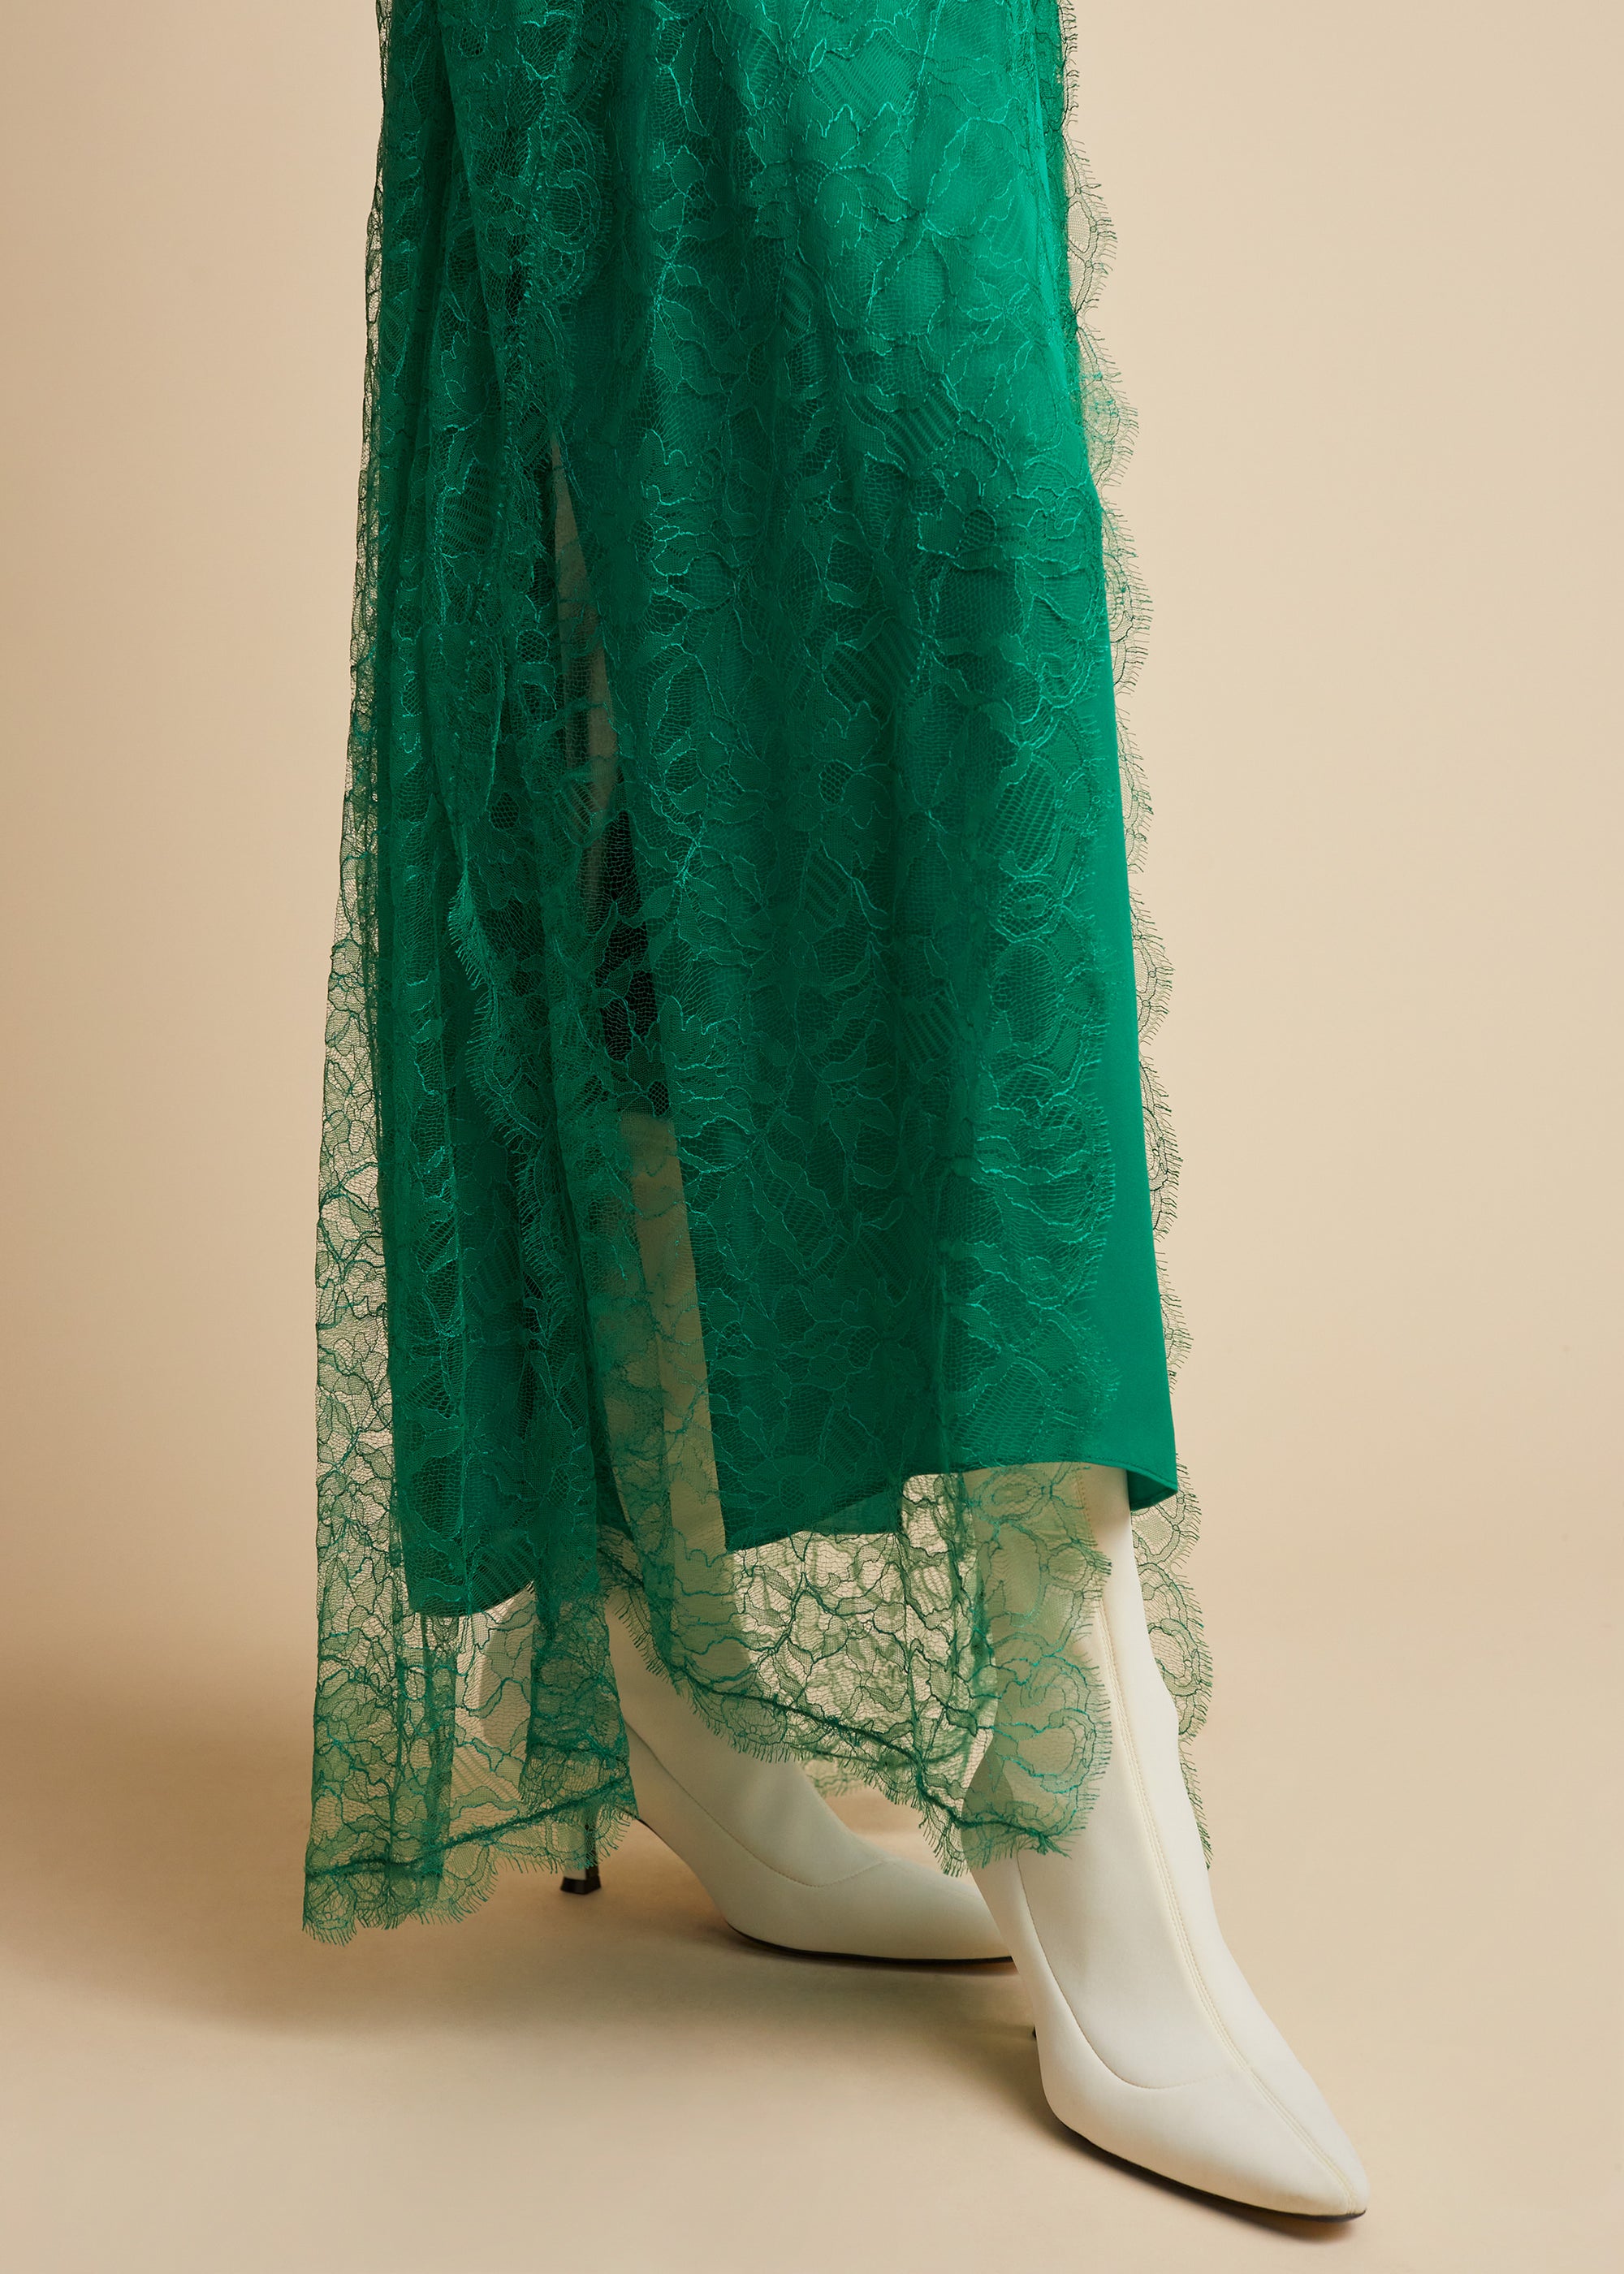 Ash dress - Emerald